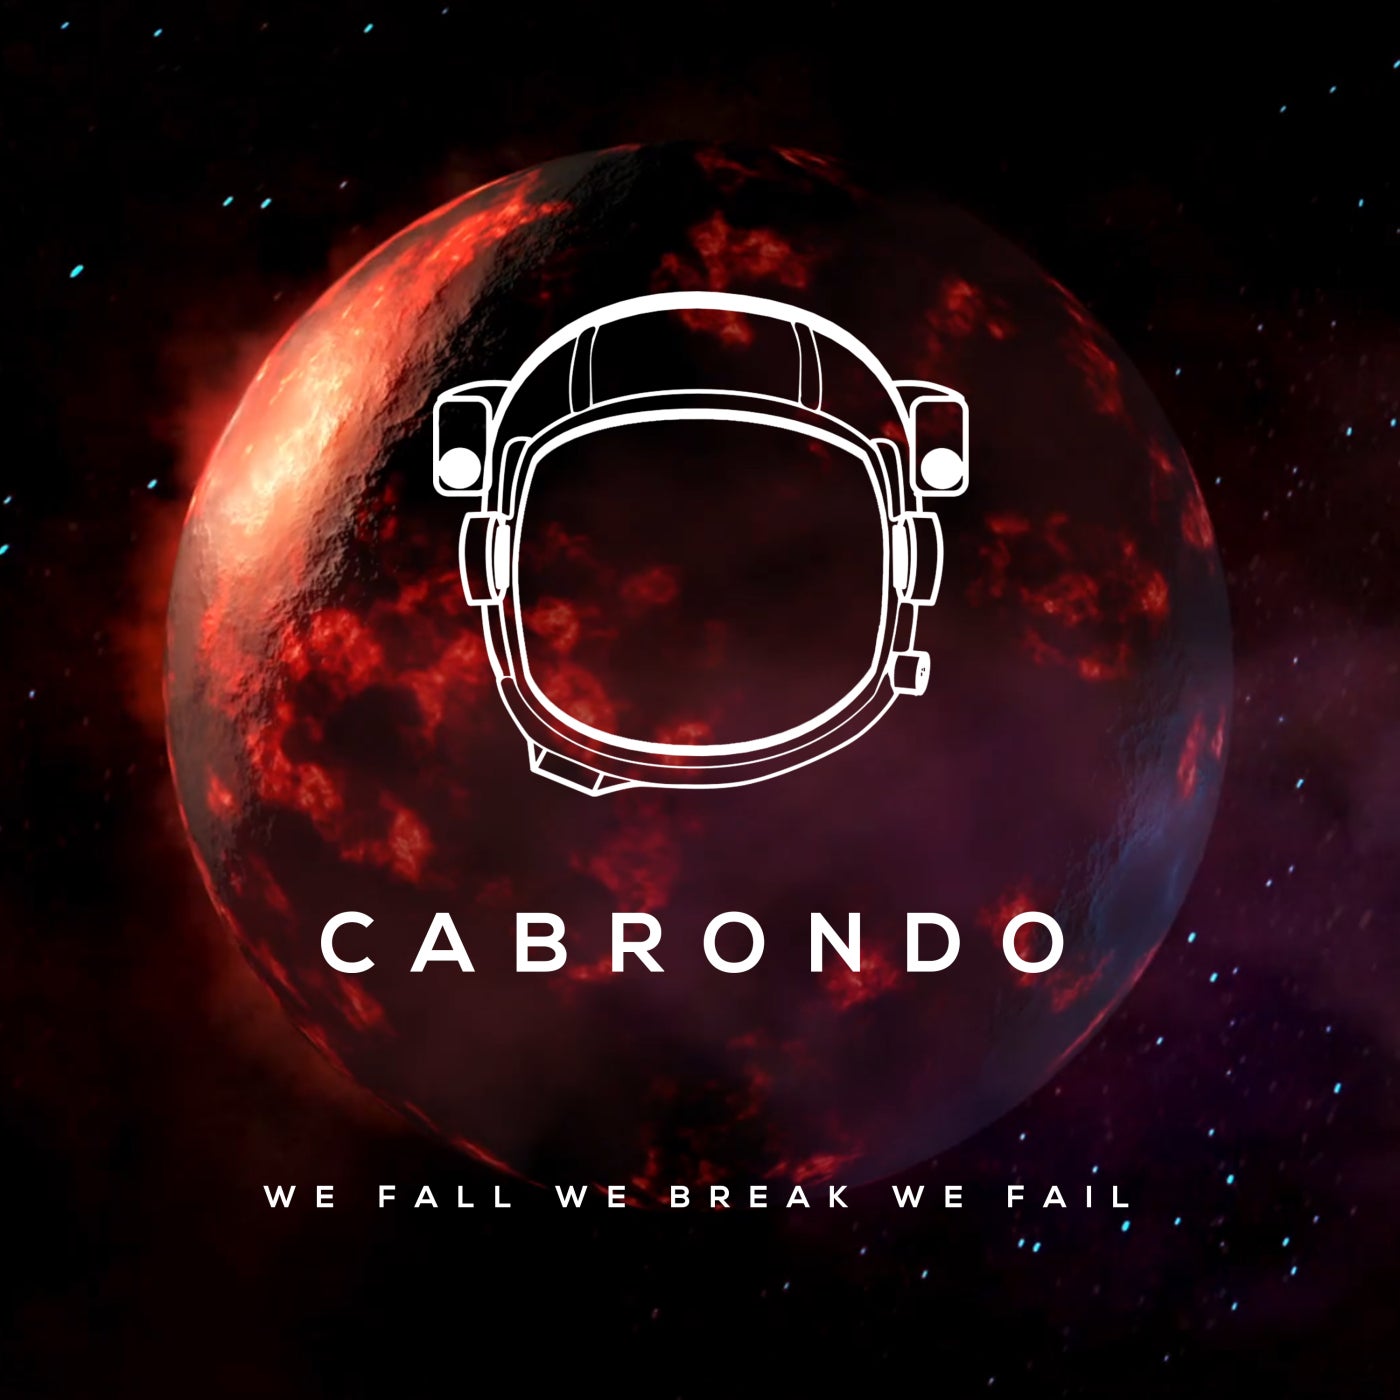 Cabrondo - We Fall We Break We Fail (Original Mix)